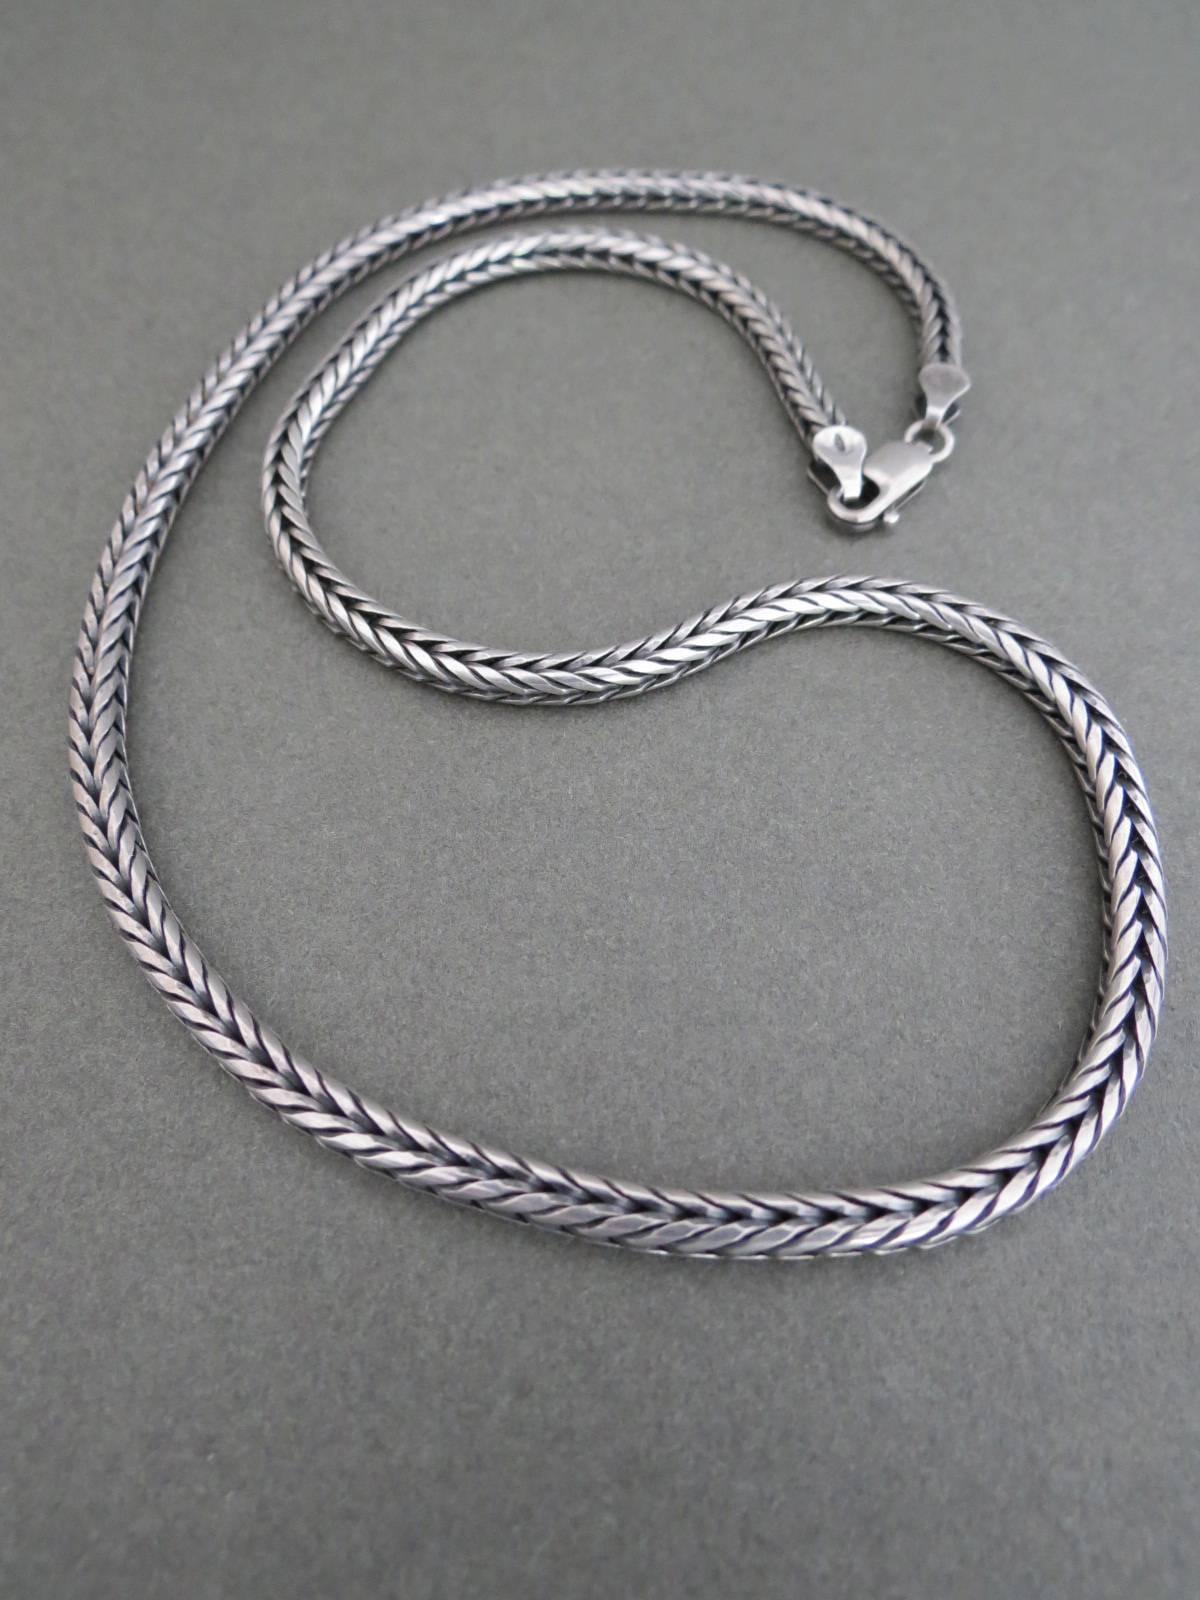 snakeskin chain